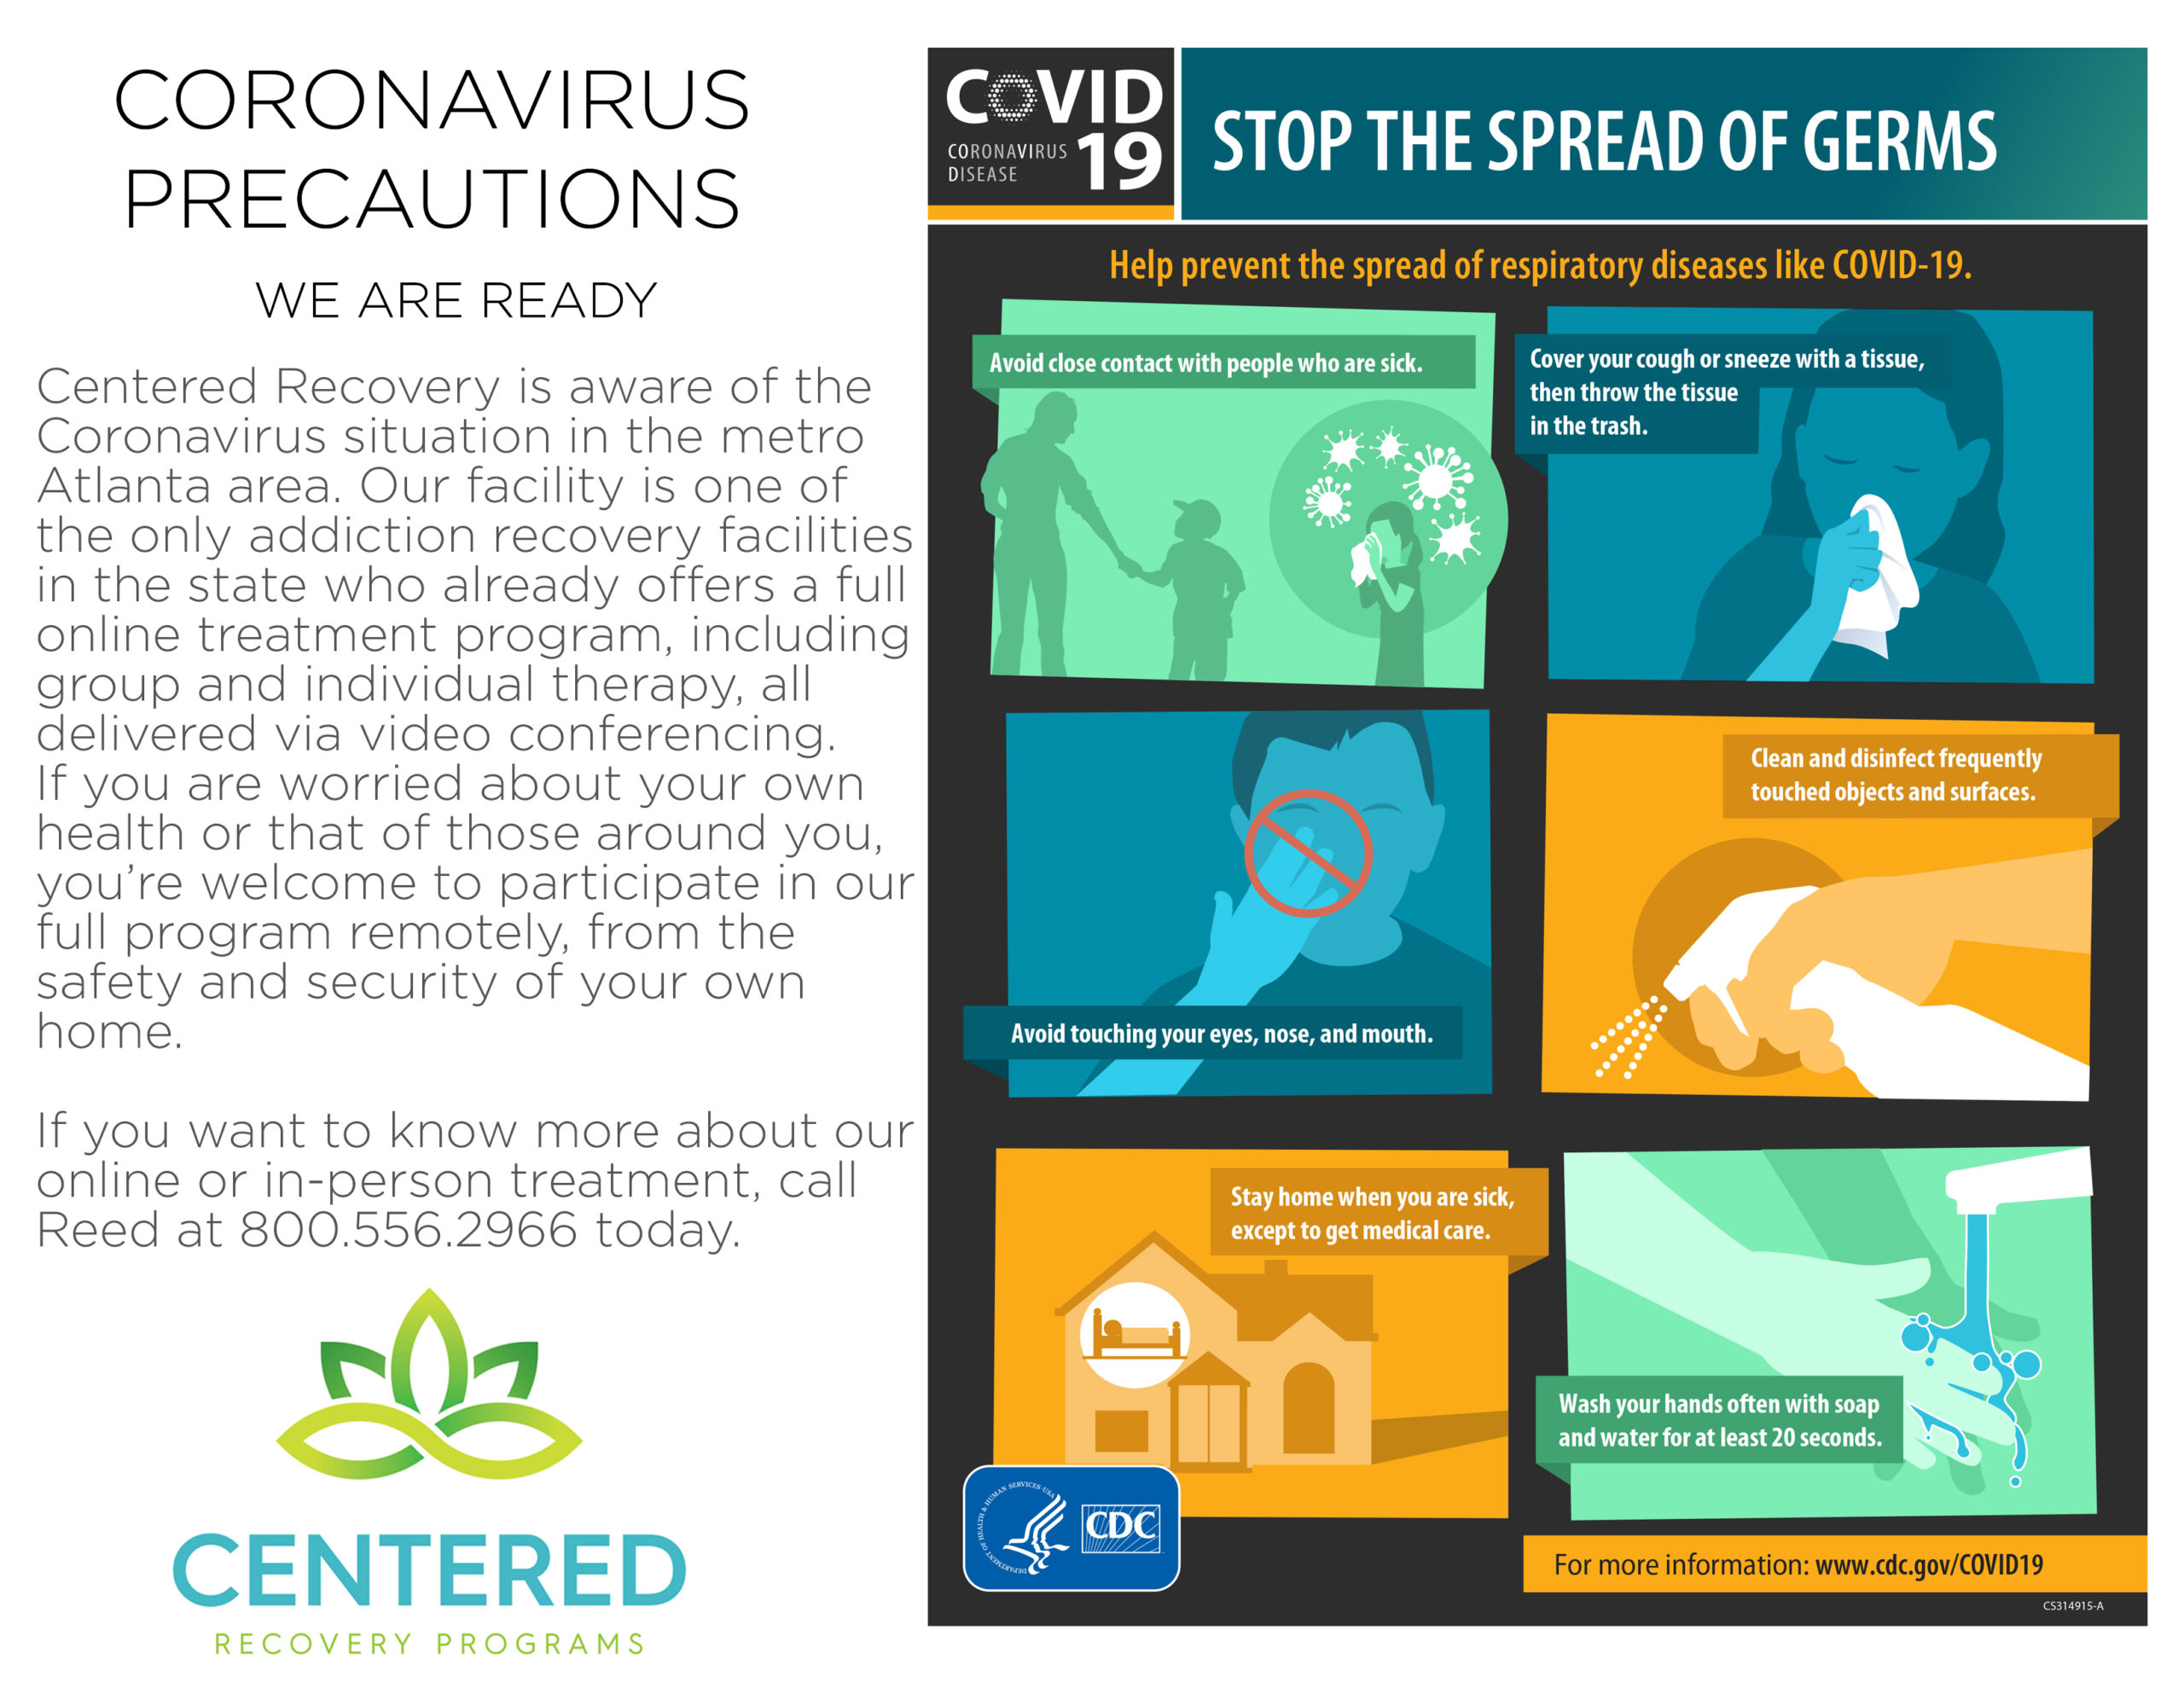 Will the Coronavirus affect my addiction treatment?